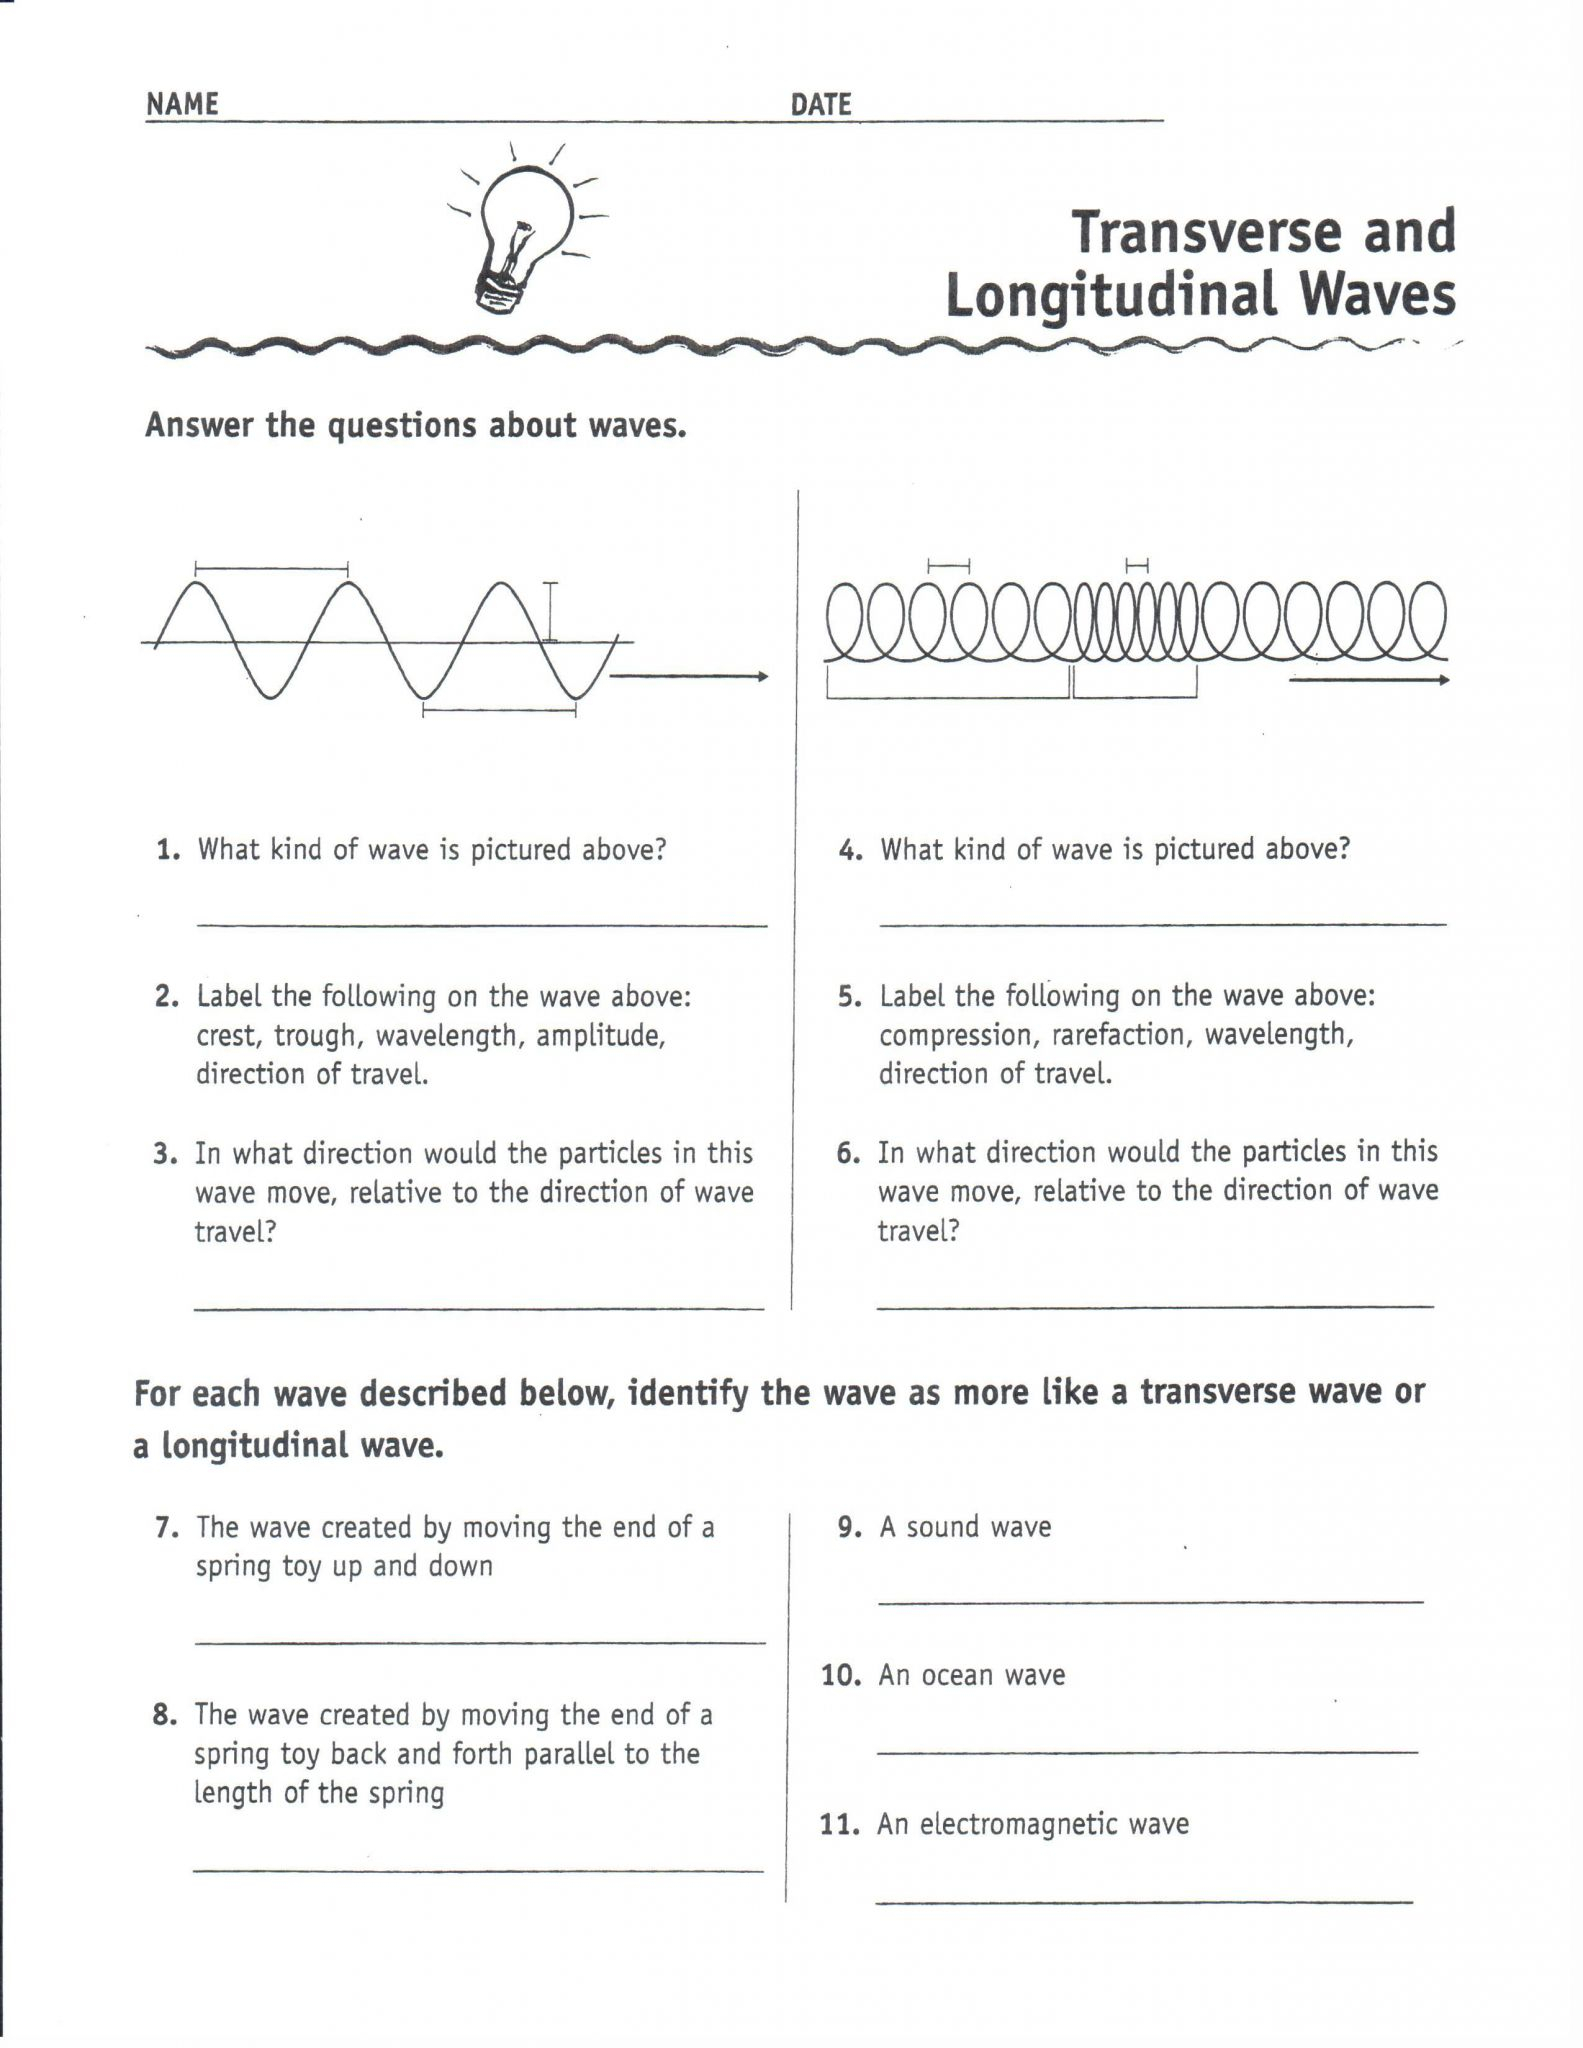 Waves Sound And Light Worksheet Answer Key | db-excel.com